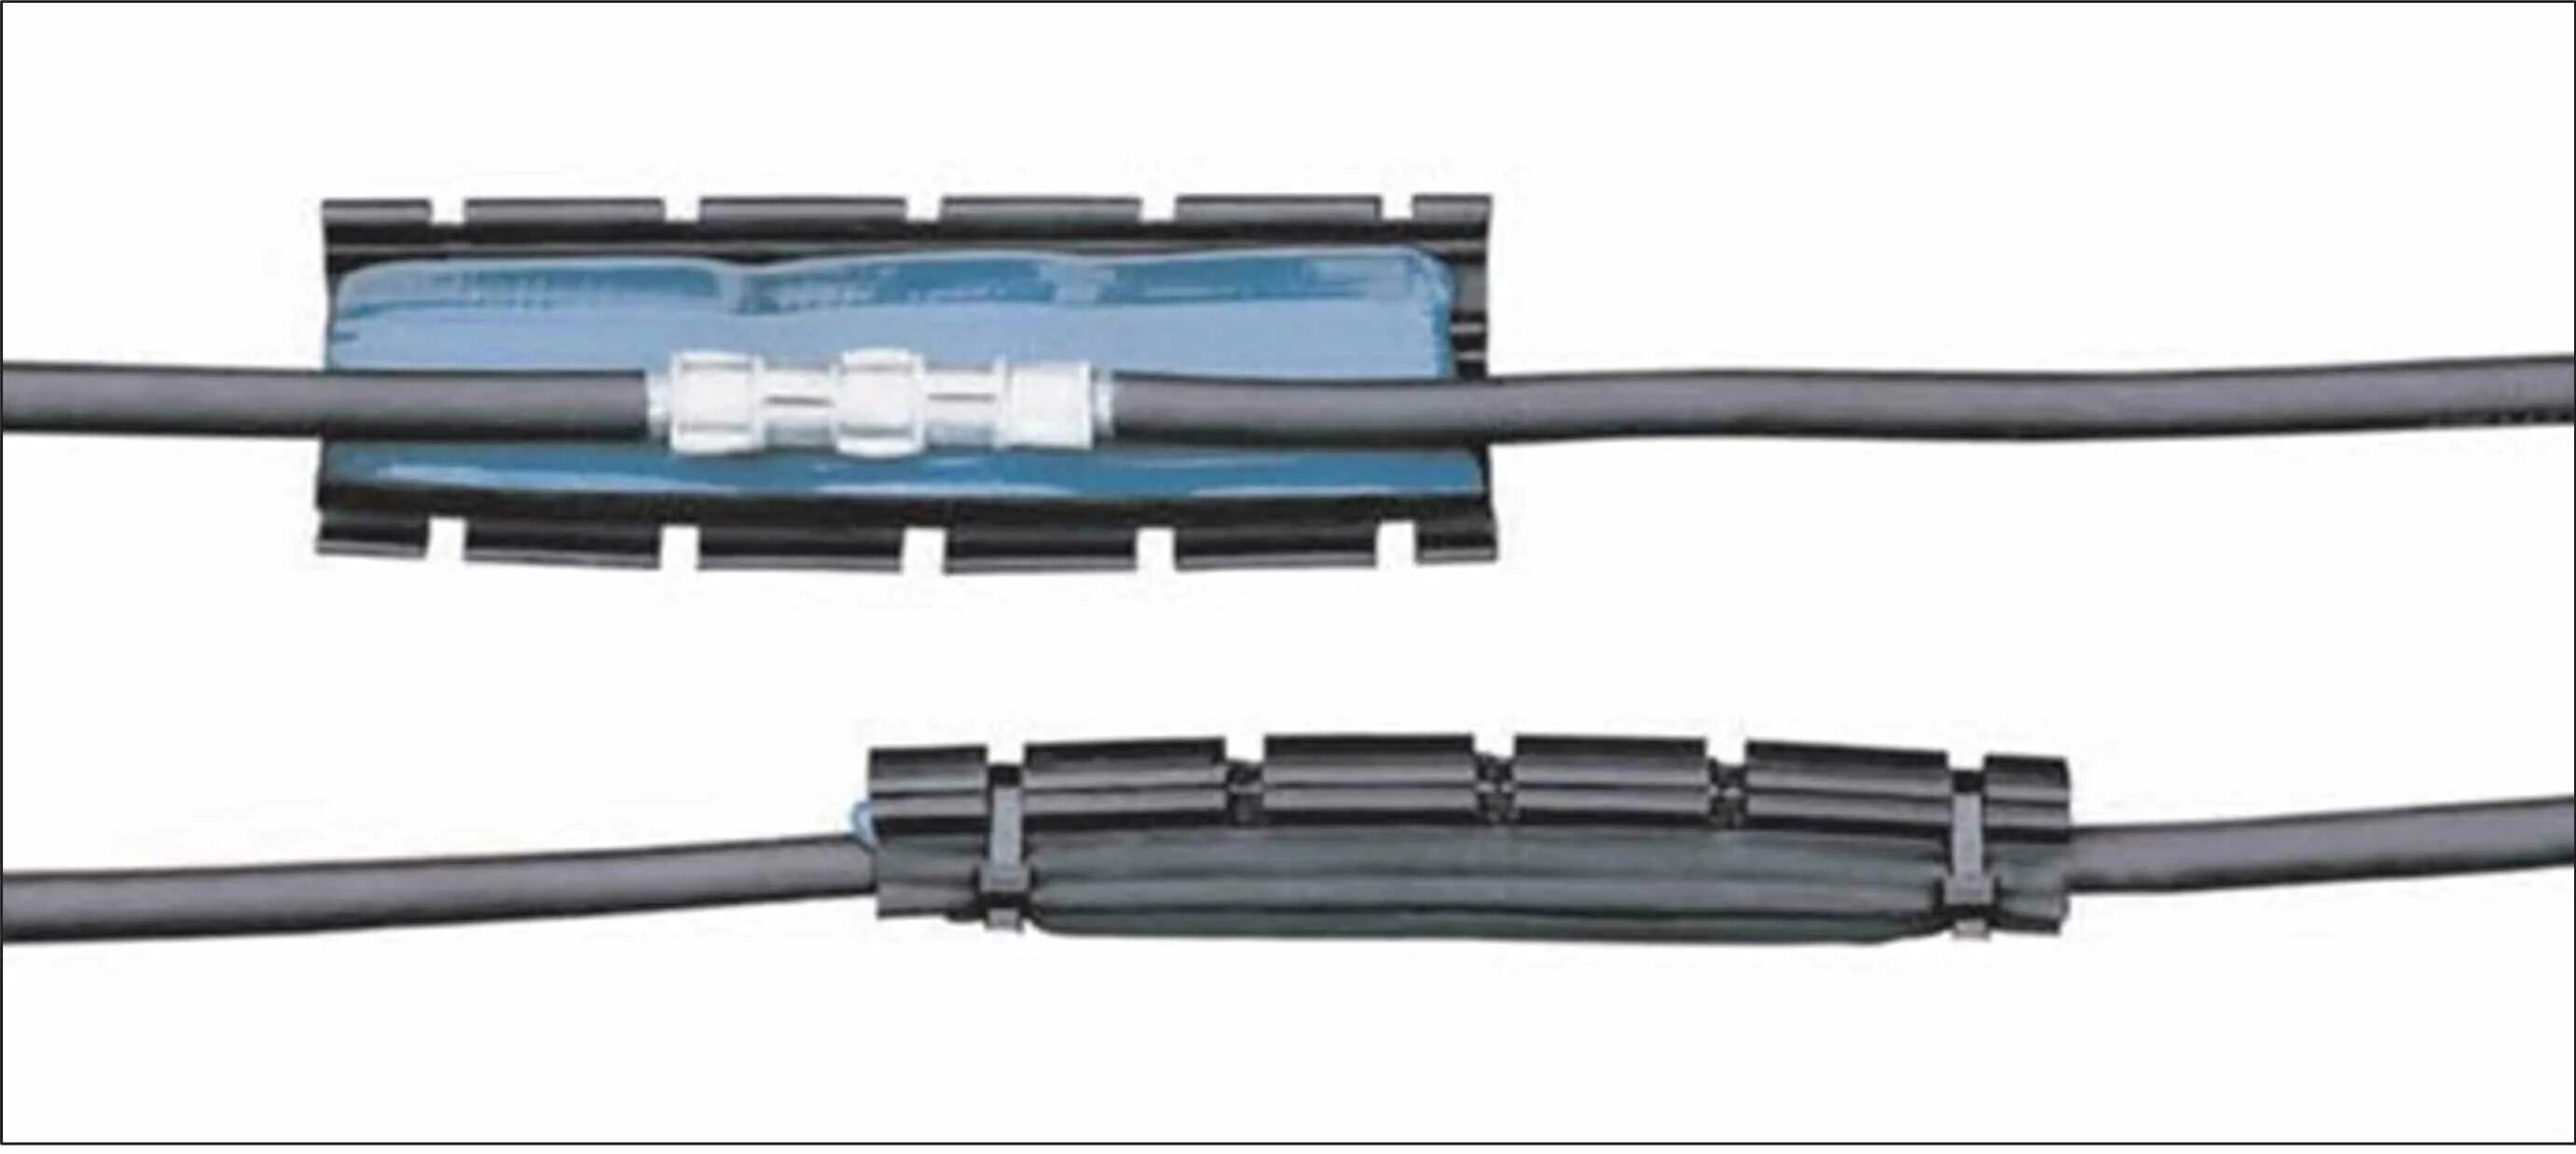 Соединительная муфта для кабеля 4х95- 4х150. Муфта соединительная для кабеля СИП 4х16. Соединительная муфта для СИП 2 (3х35+1х50) с кабелем. Муфта Райхем соединительная.